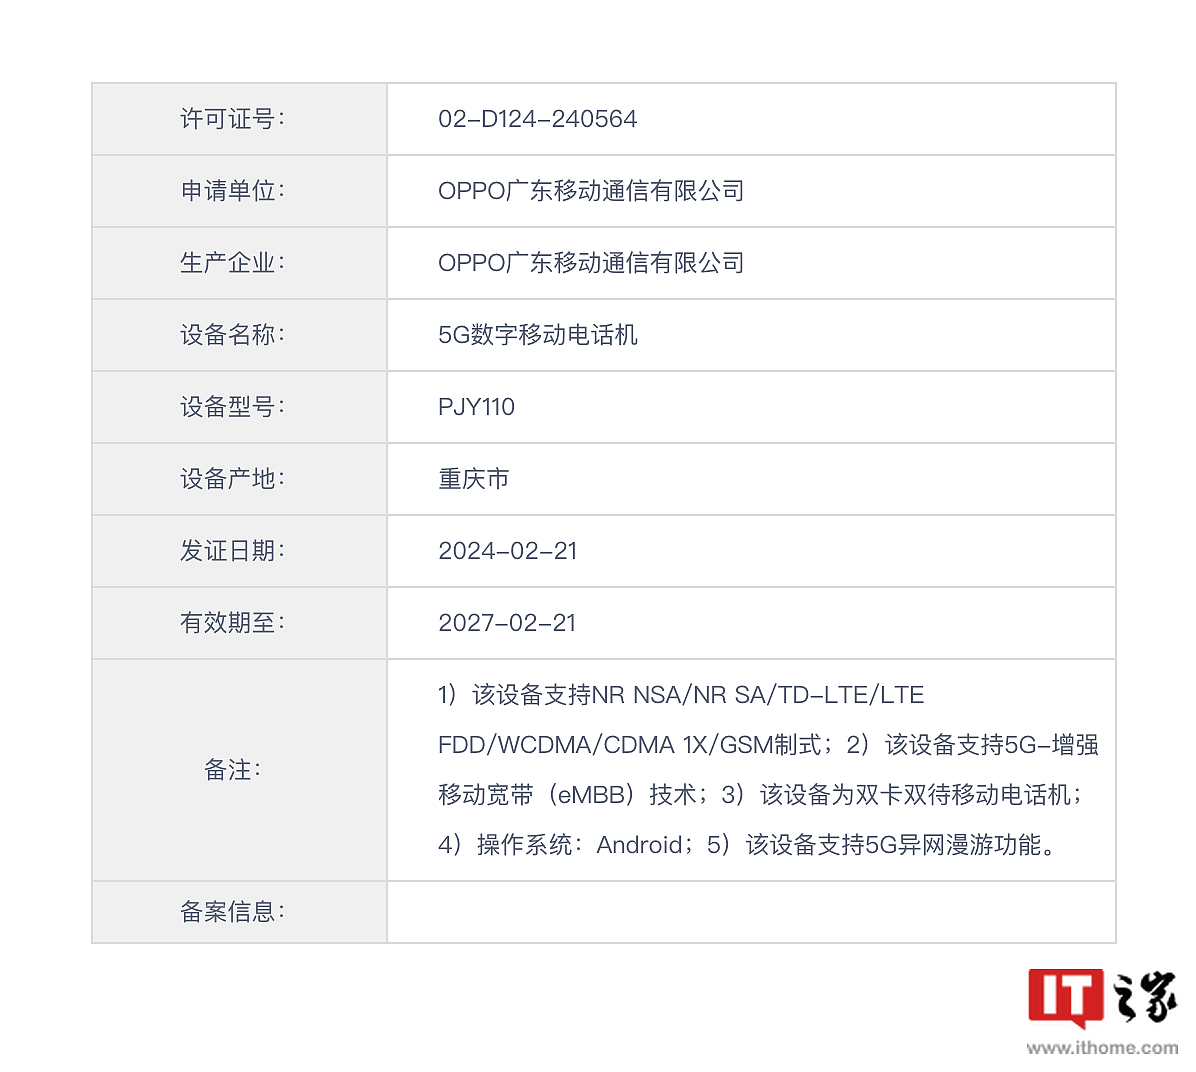 OPPO A3 Pro 手机定档 4 月 12 日发布，提供三款宋韵配色 - 7